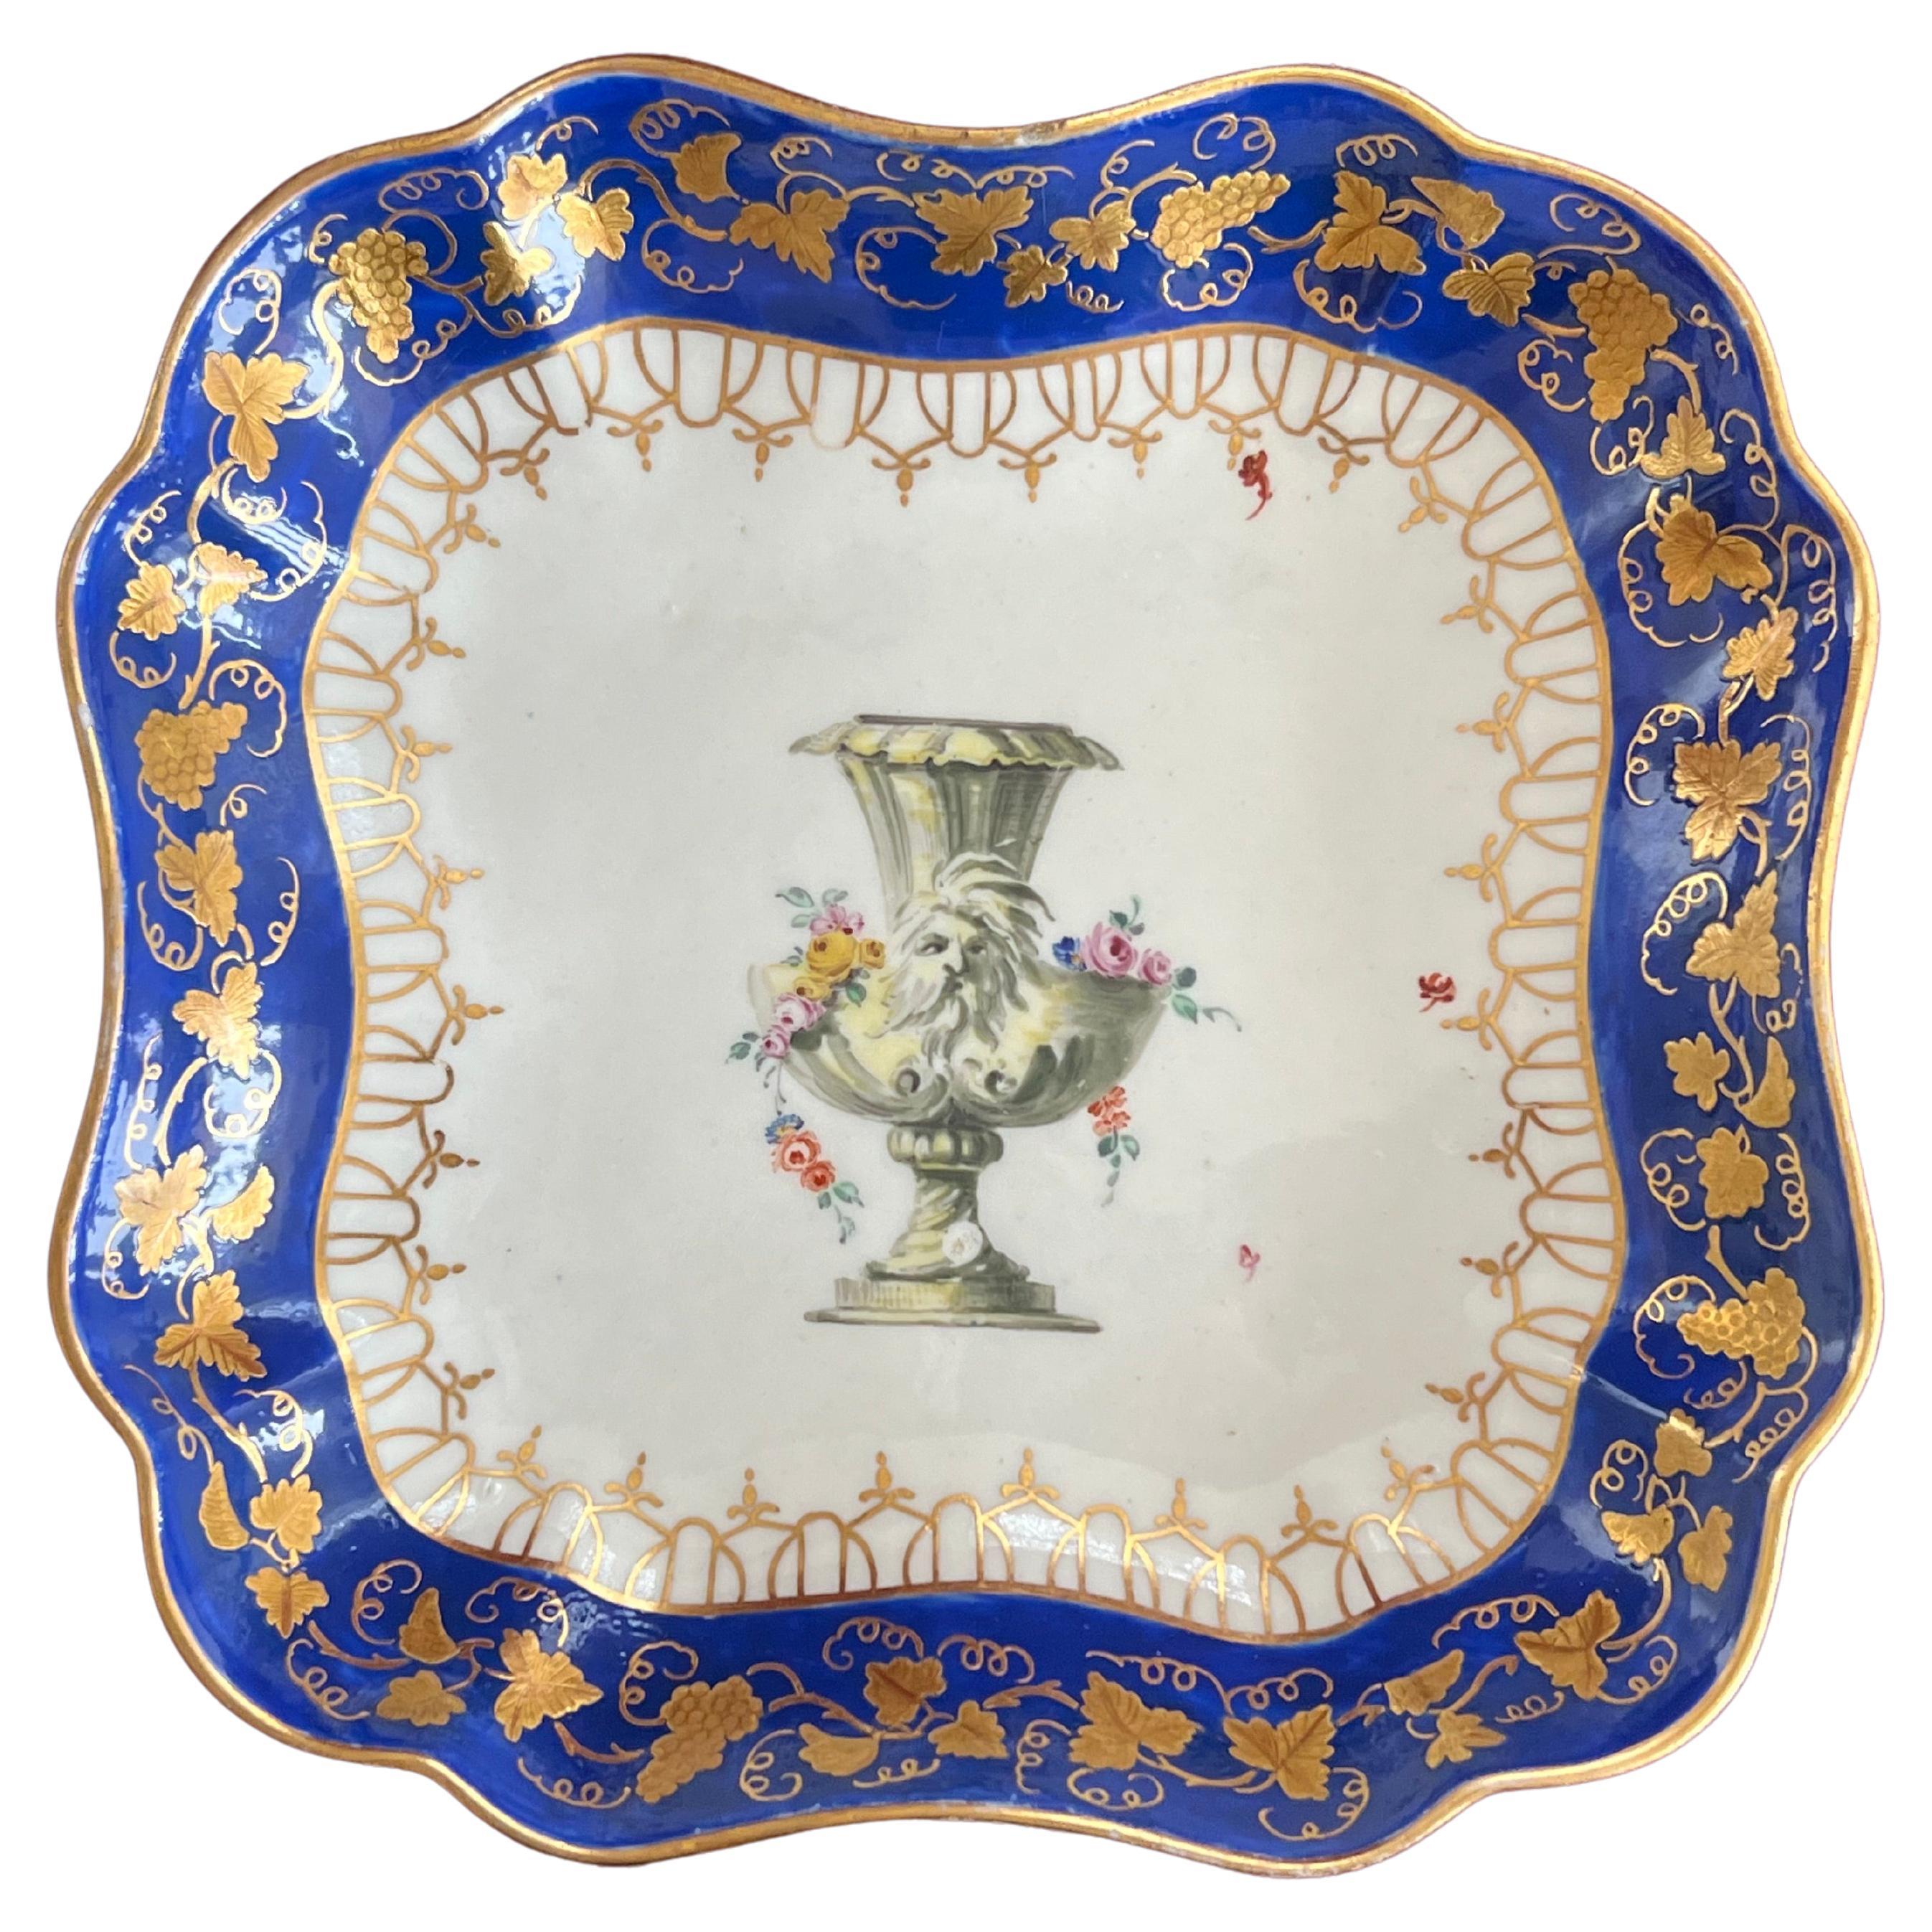 Worcester Porcelain James Giles Studio Decorated Dish, C.1770